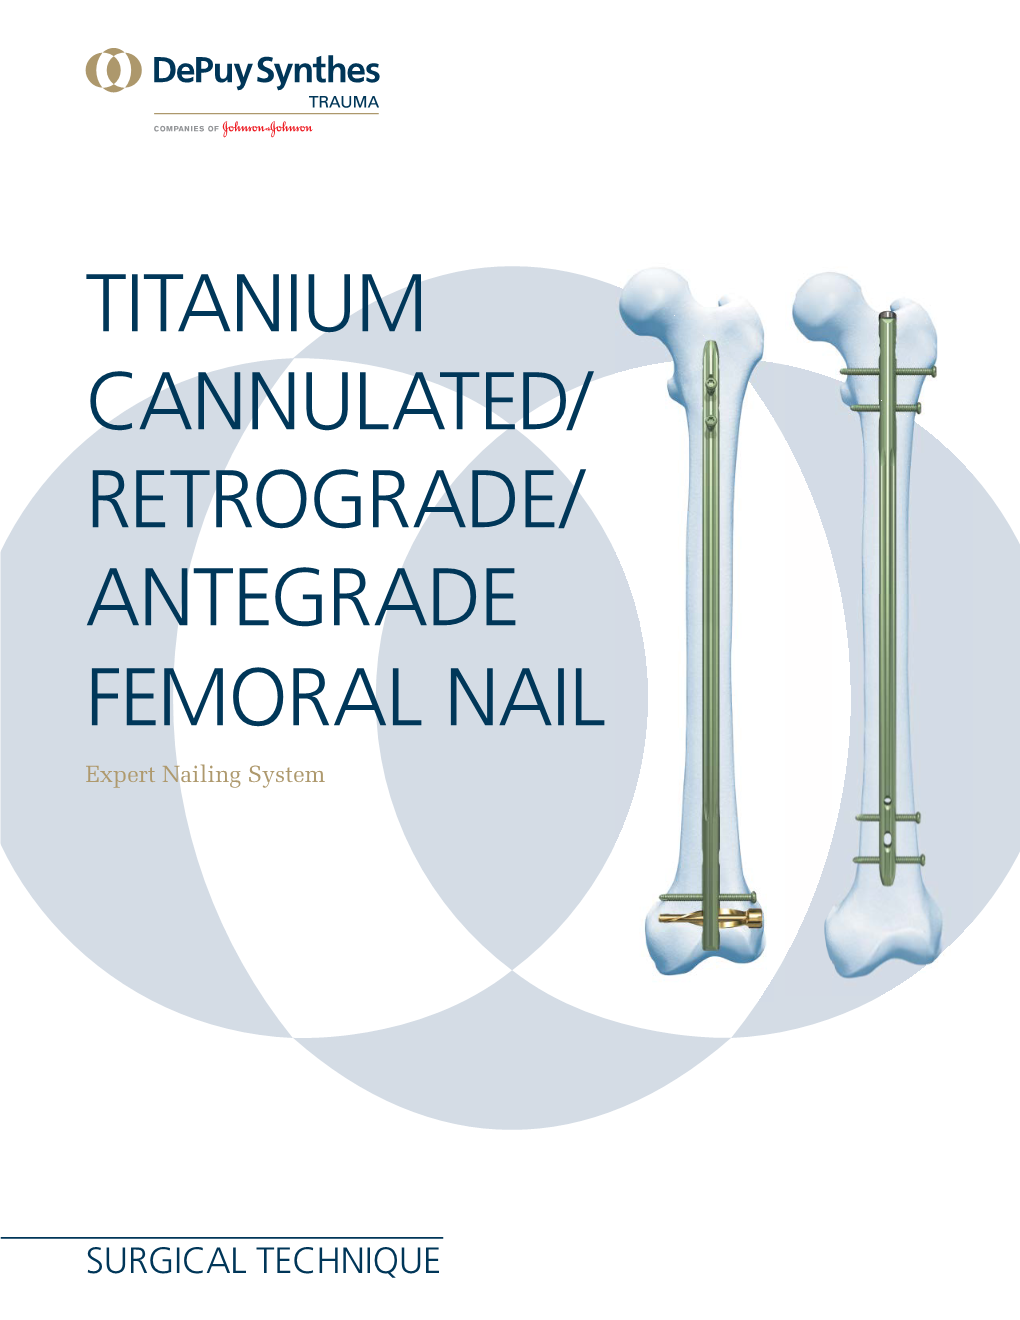 Titanium Cannulated/ Retrograde/ Antegrade Femoral NAIL Expert Nailing System